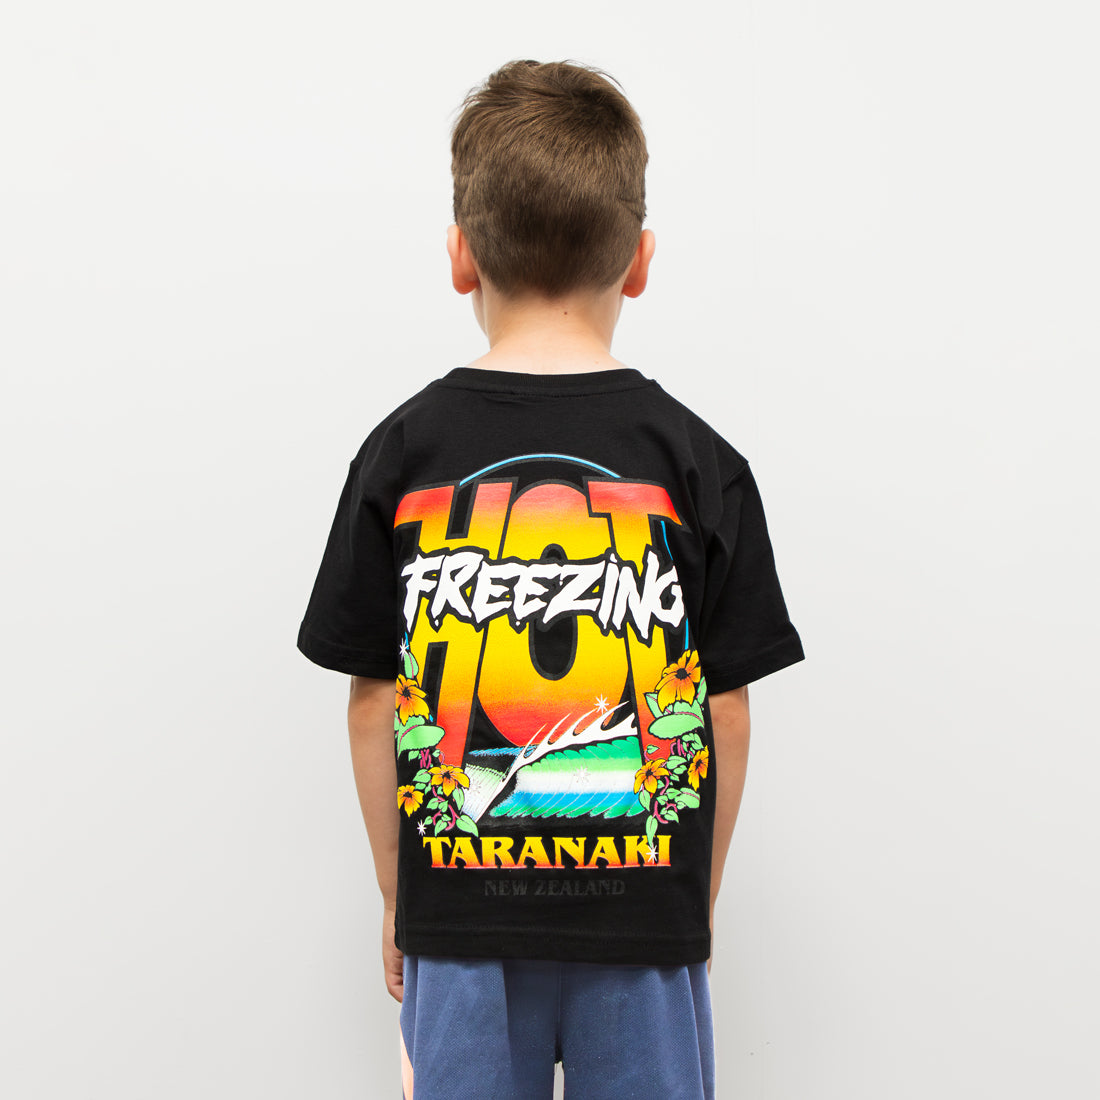 Kids Freezing Hot T-Shirt